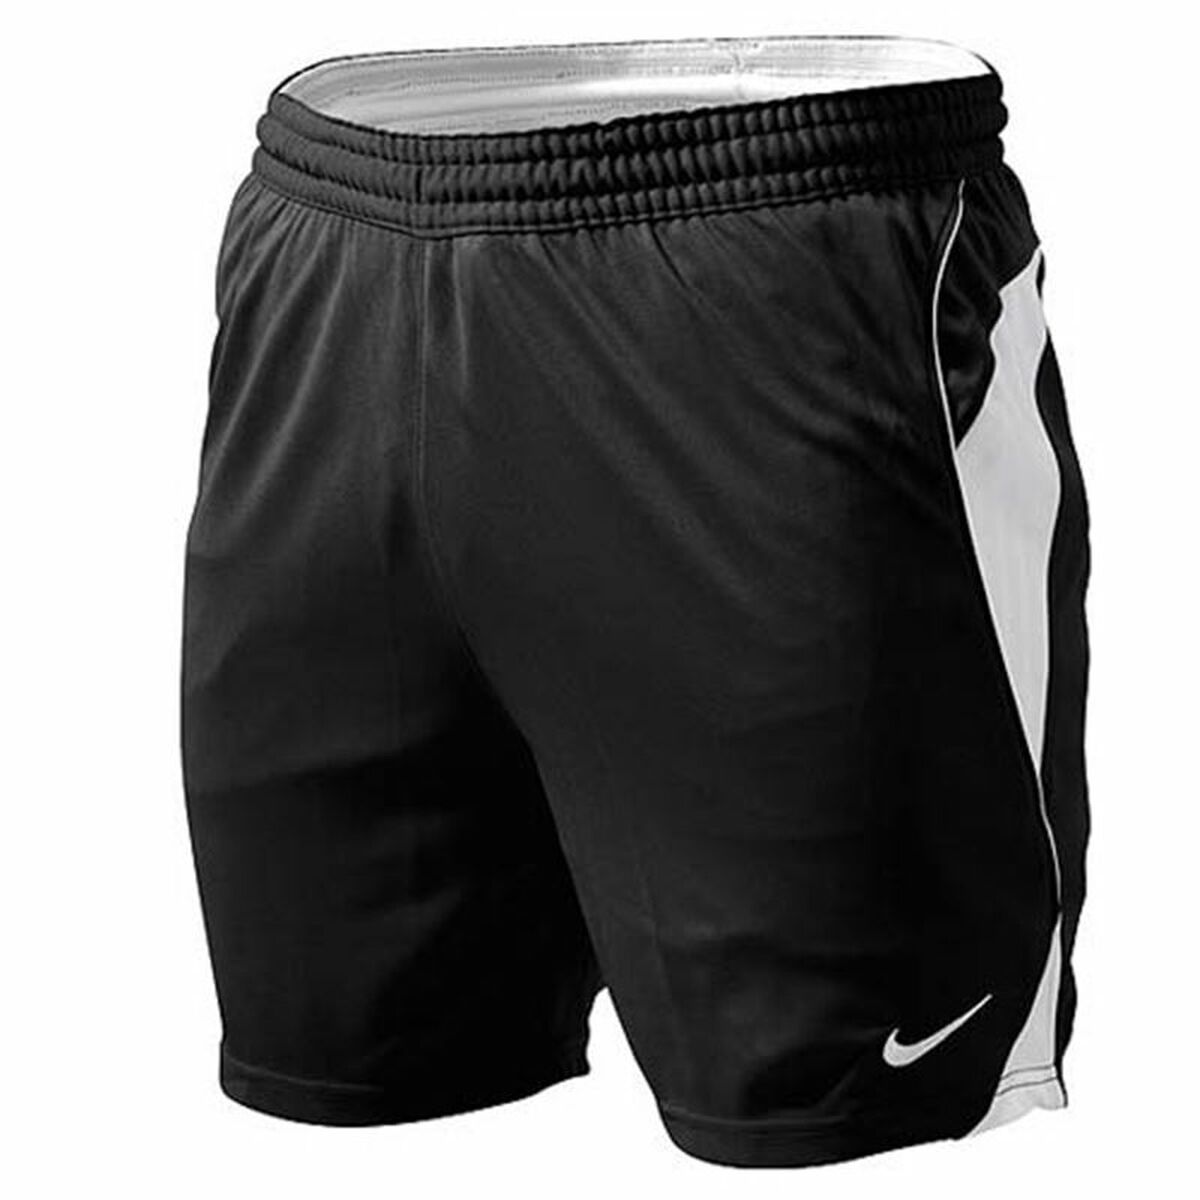 Pantaloni Corti Sportivi da Uomo Nike Knit Nero